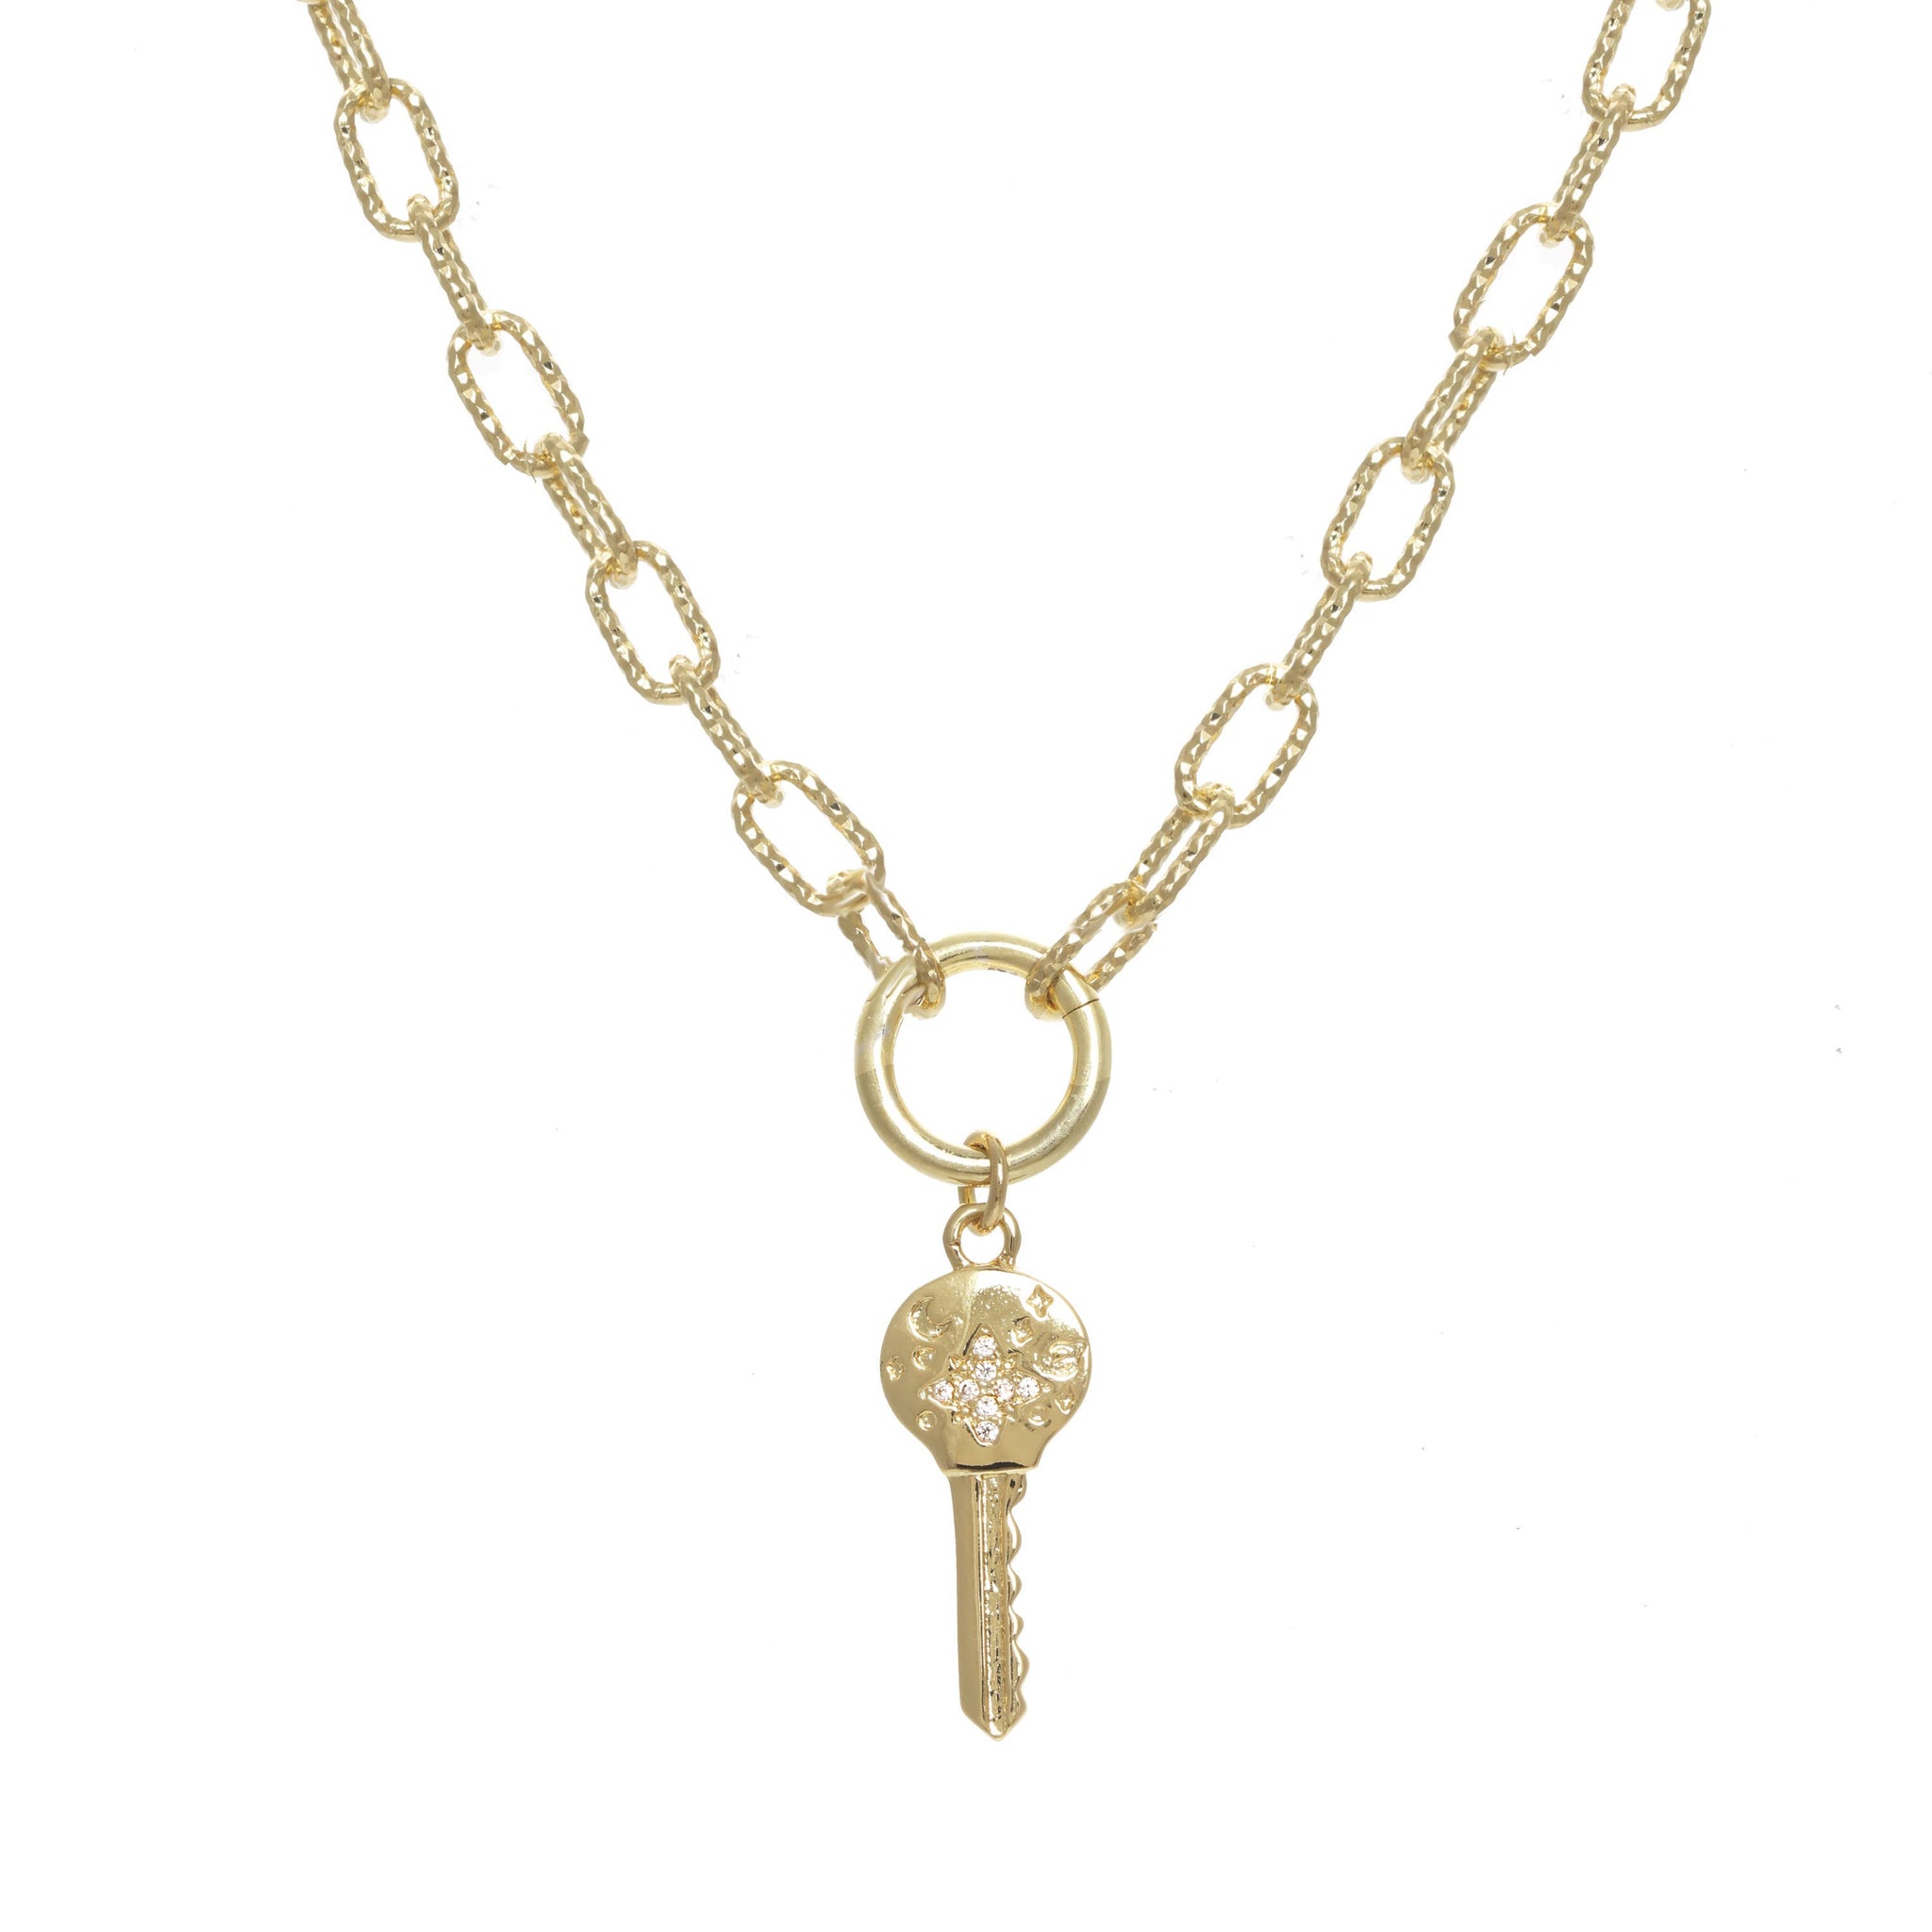 Golden Key Charm Necklace